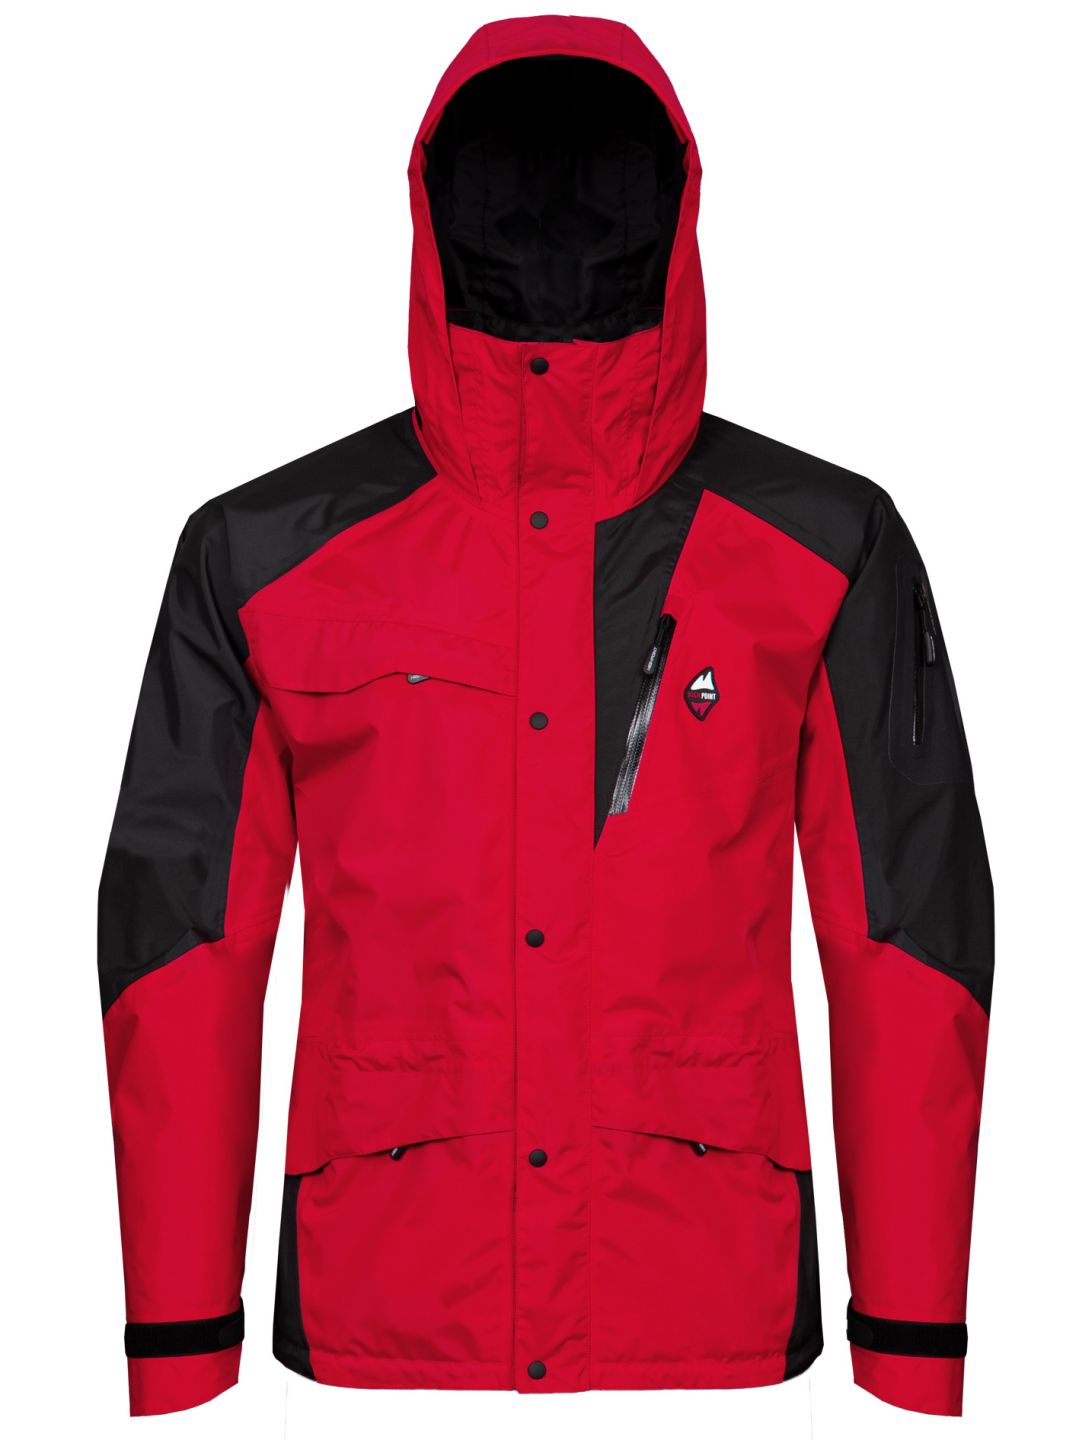 HIGH POINT MANIA 7.0 jacket red/black varianta: XXXL